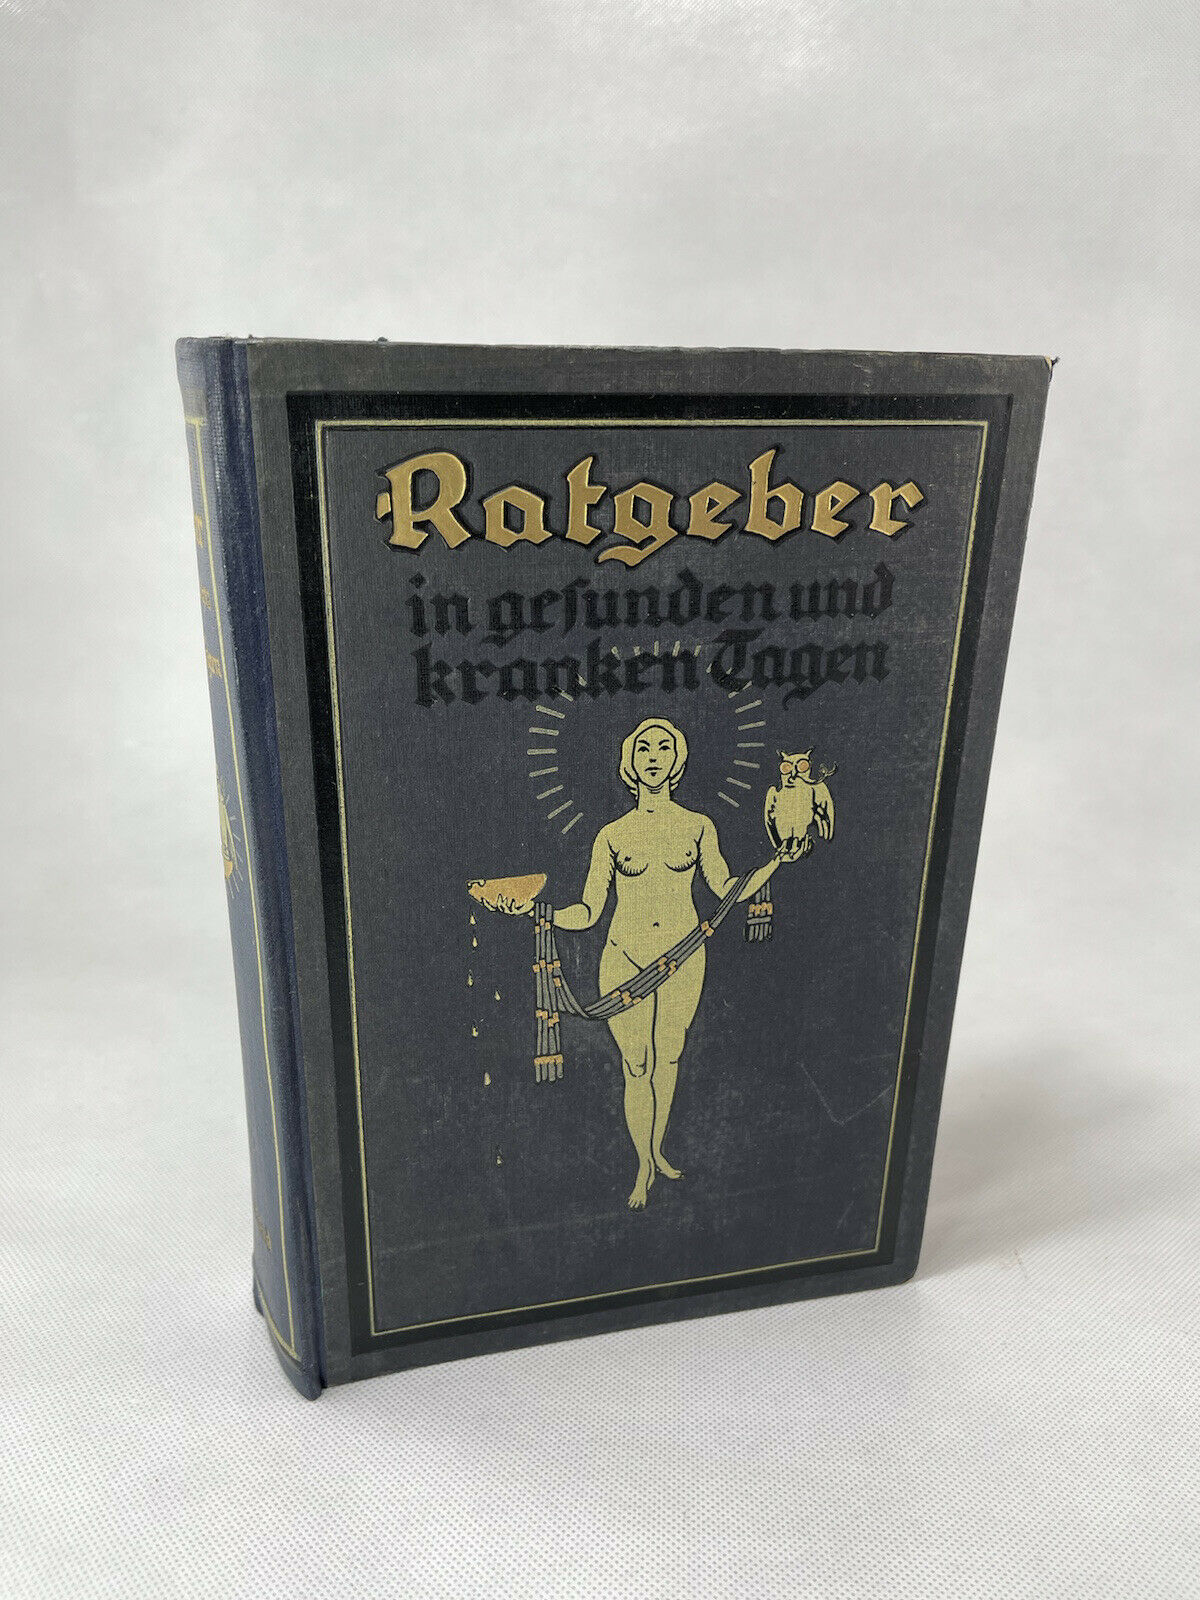 Dr. Konig Ratgeber In Gefundenund Kranken German Volume Ii Antique Medical Book